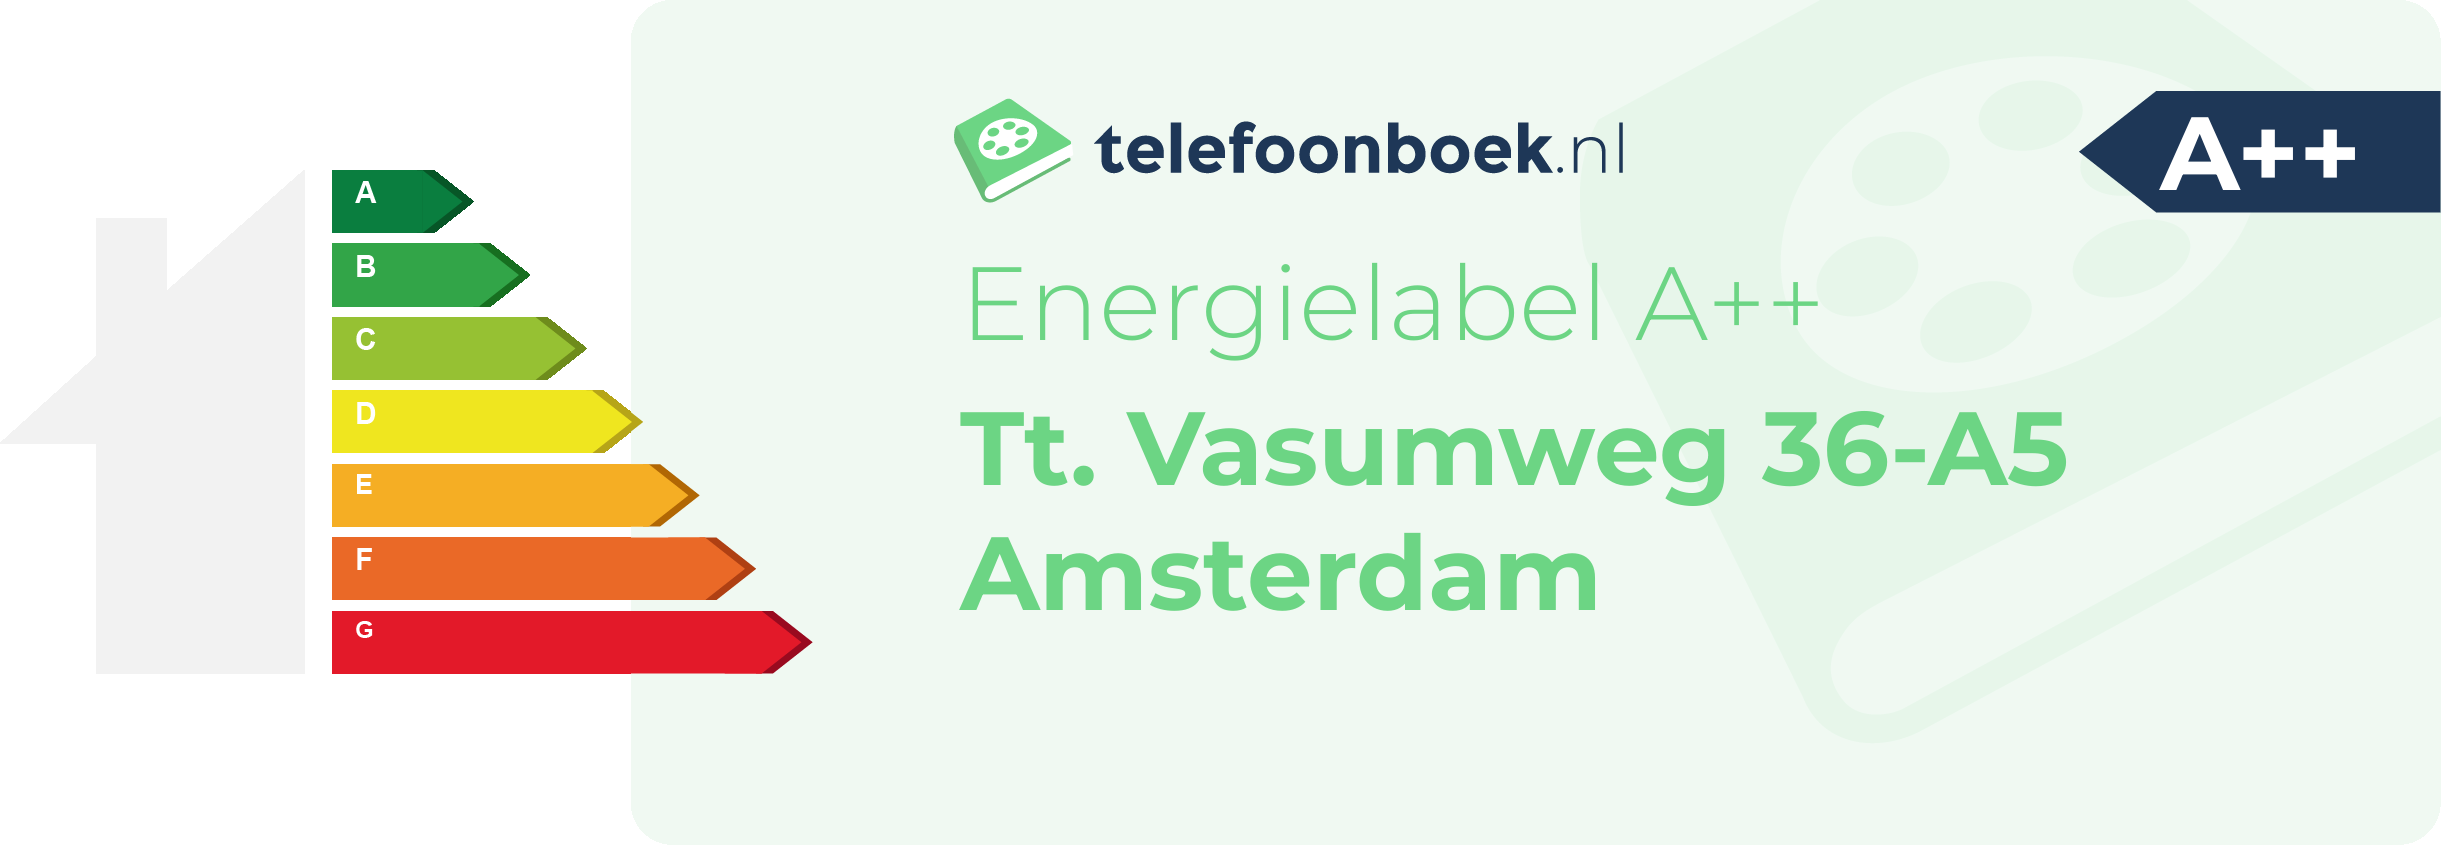 Energielabel Tt. Vasumweg 36-A5 Amsterdam